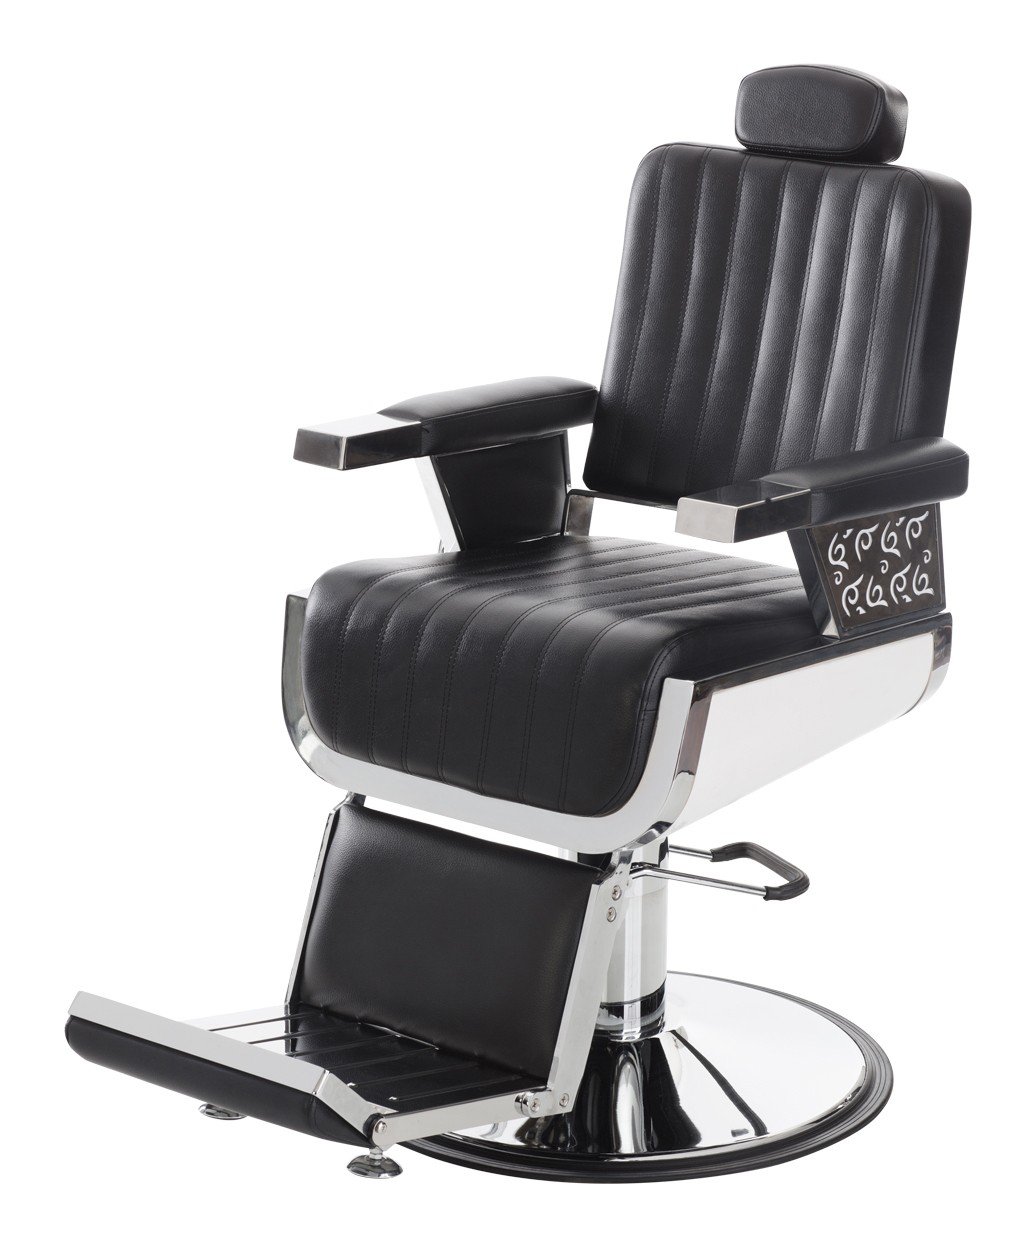 Omni Professional Barber Chair